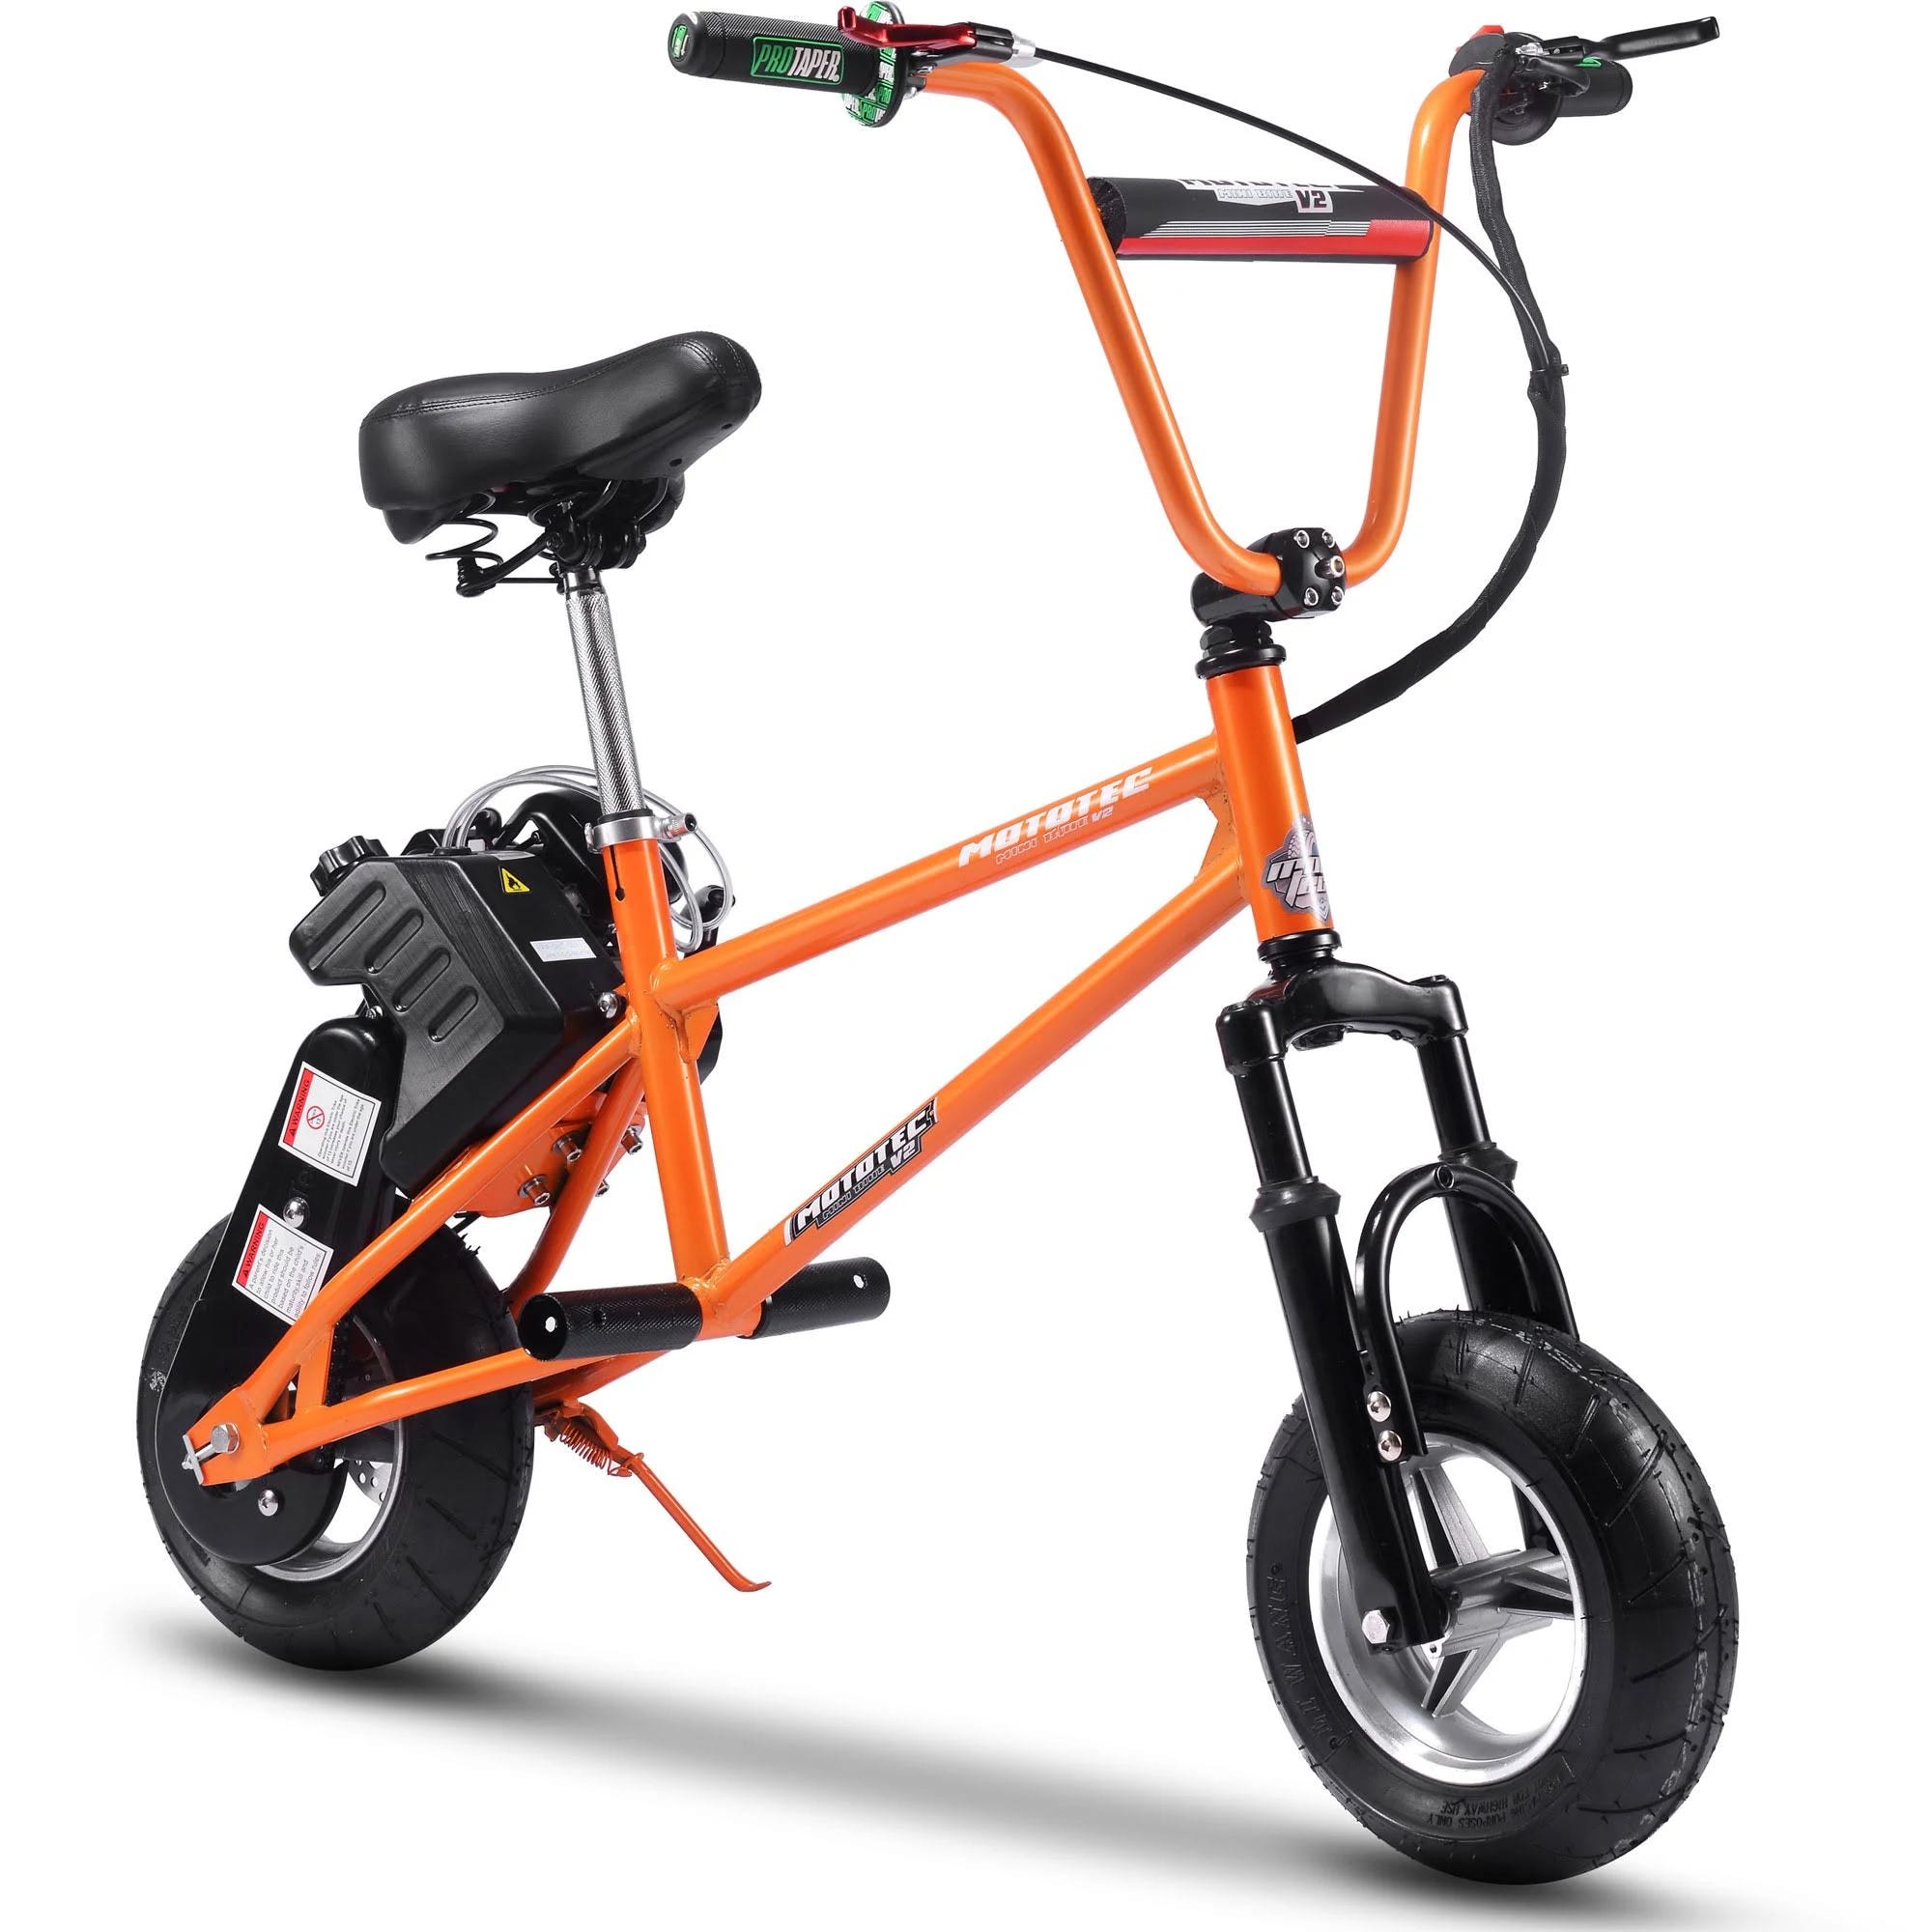 MotoTec 49cc Gas Mini Bike V2 Orange - Perfect for Kids & Adults | Image